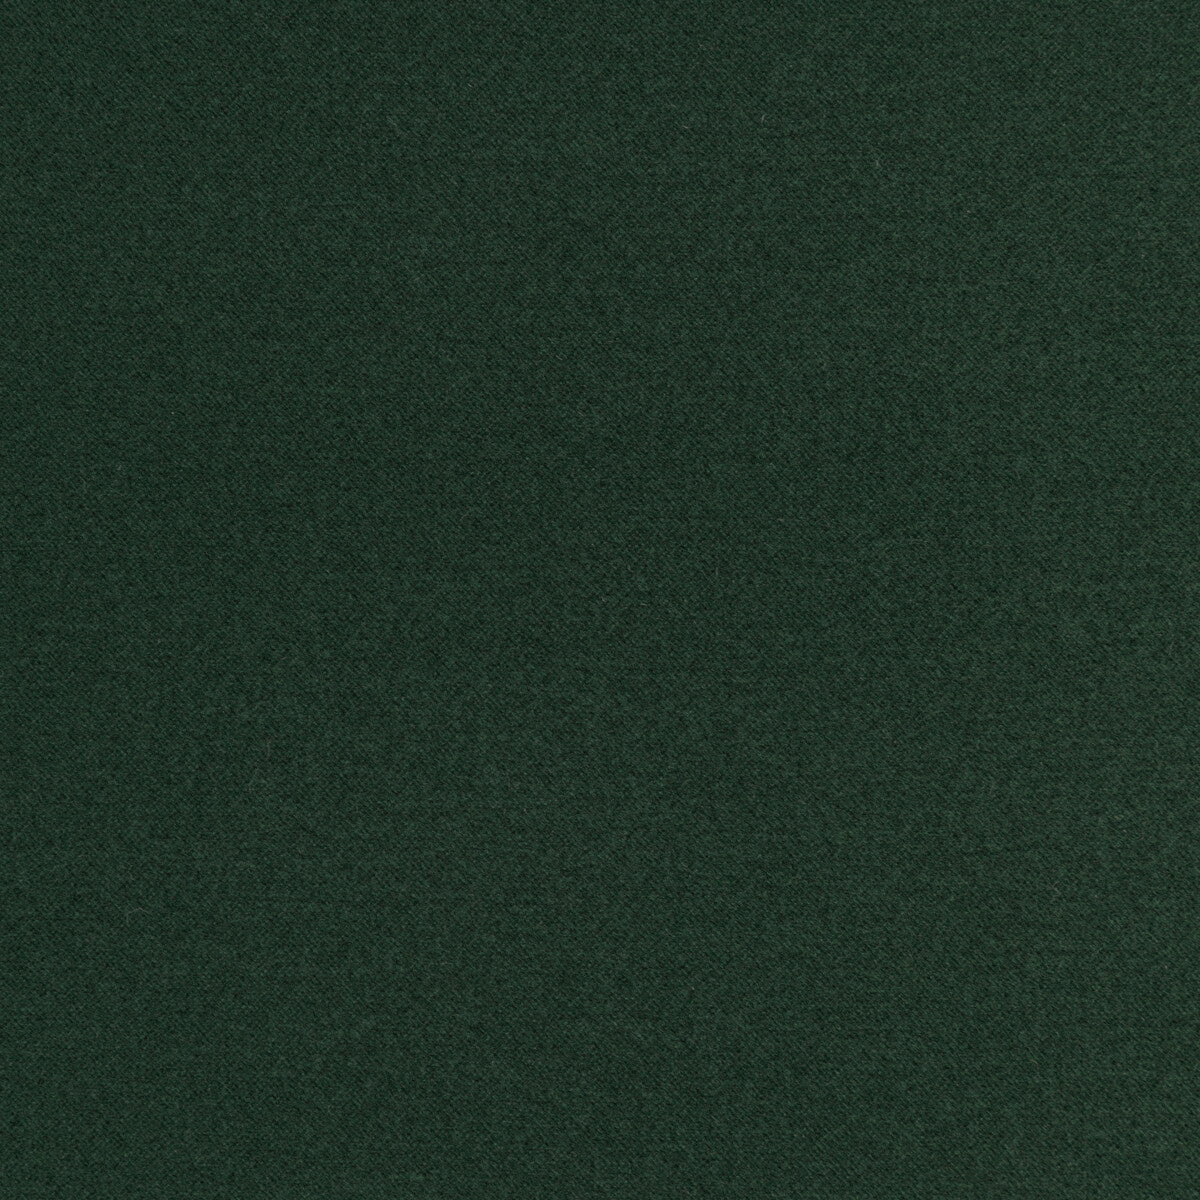 Kravet Smart fabric in 36110-3 color - pattern 36110.3.0 - by Kravet Smart in the Performance Kravetarmor collection